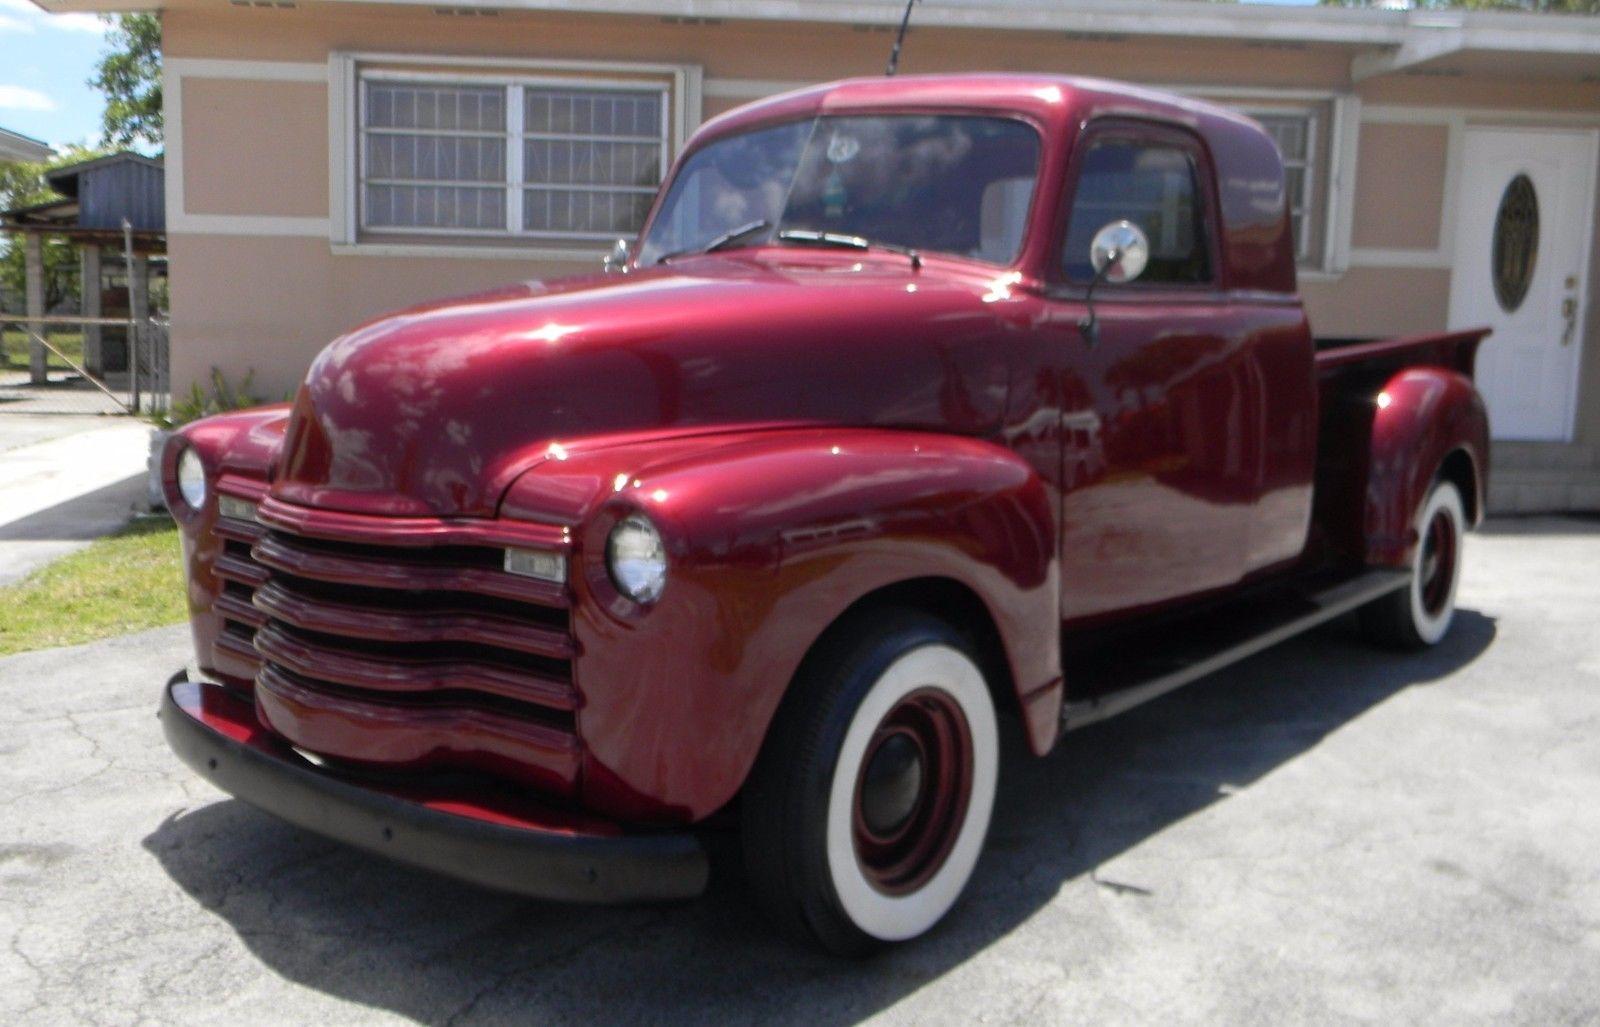 Restored 1952 Chevrolet custom extended cab Pickup for sale